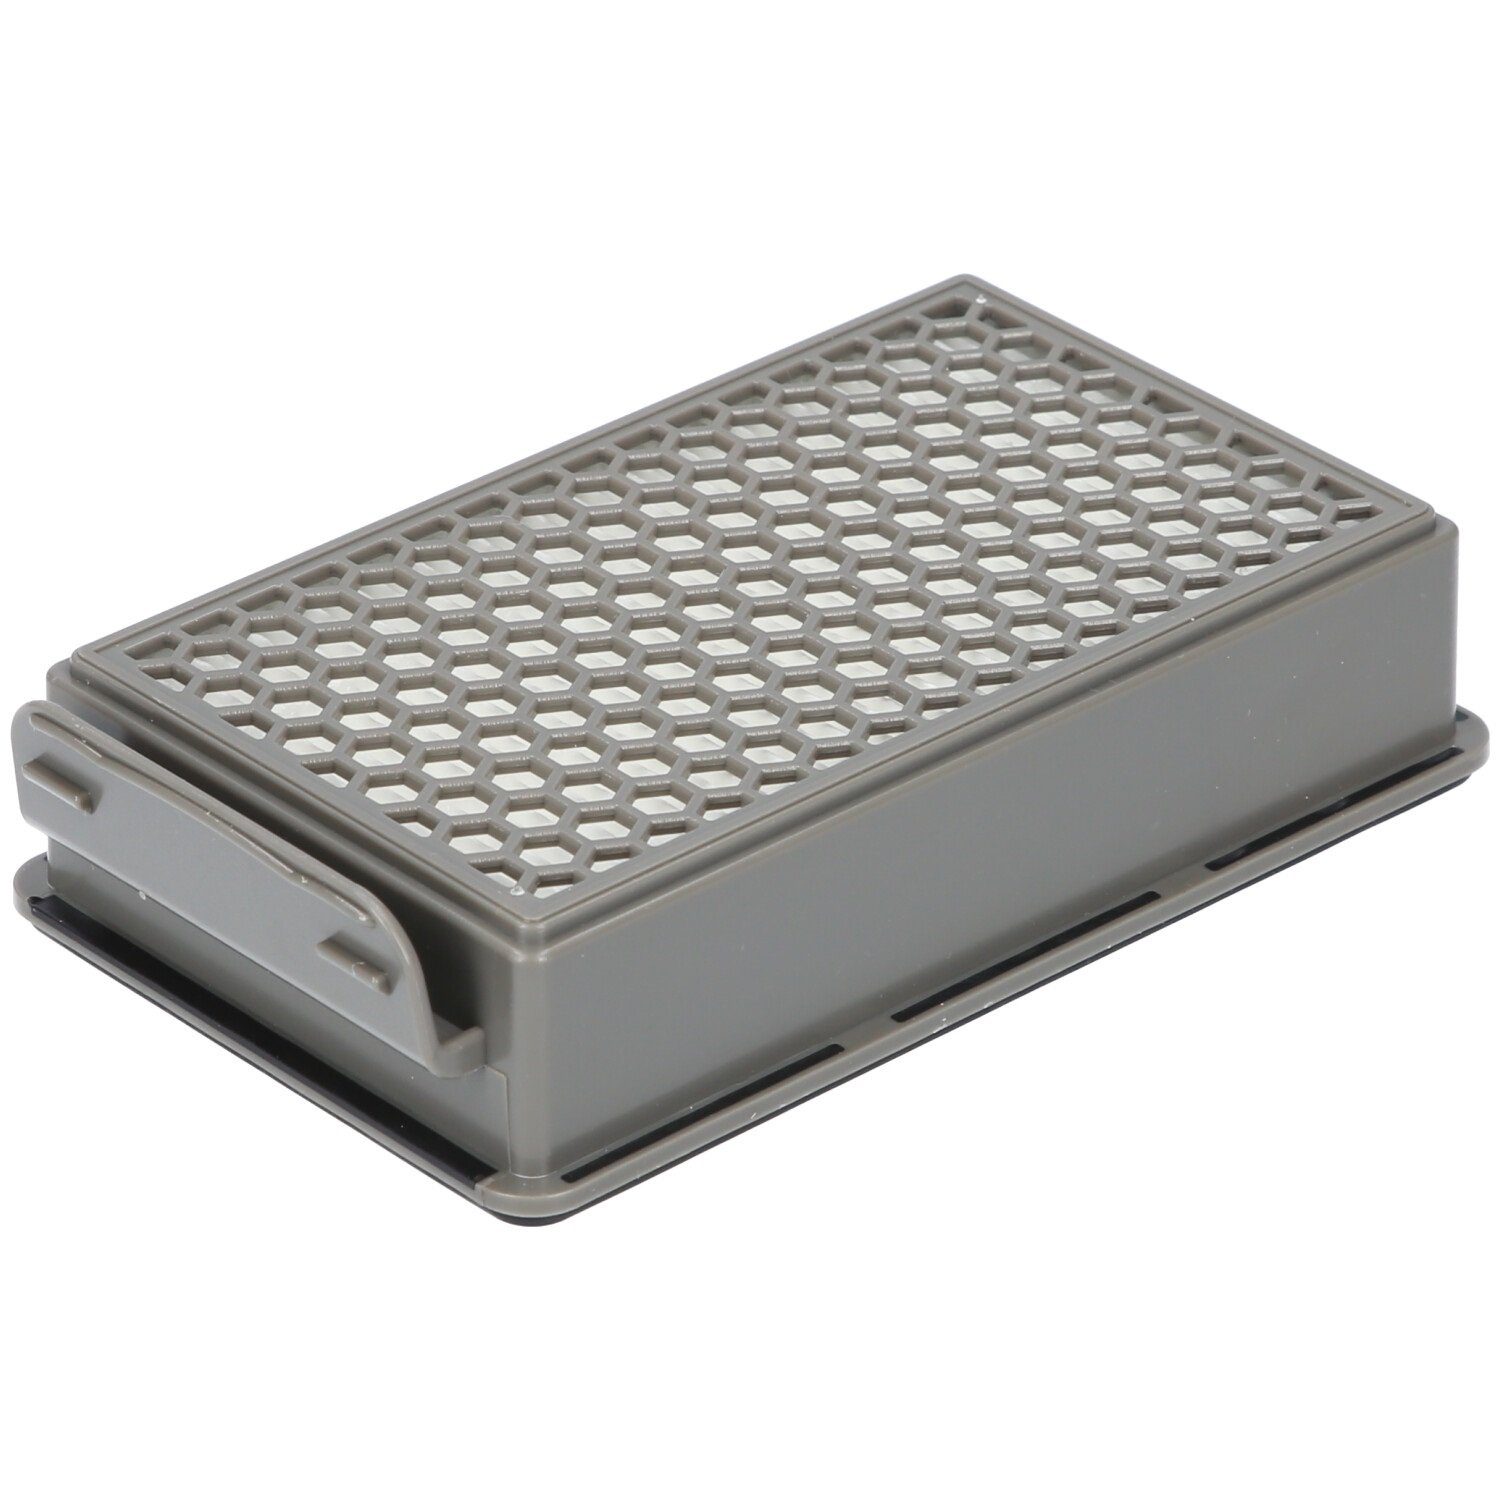 McFilter Filter-Set geeignet für Moulinex MO3774PA, für MO3723PA / MO3786PA, / MO3751PA MO3718PA 2x Rundfilter, 2x Alternativ / ZR005901 Filterkassette